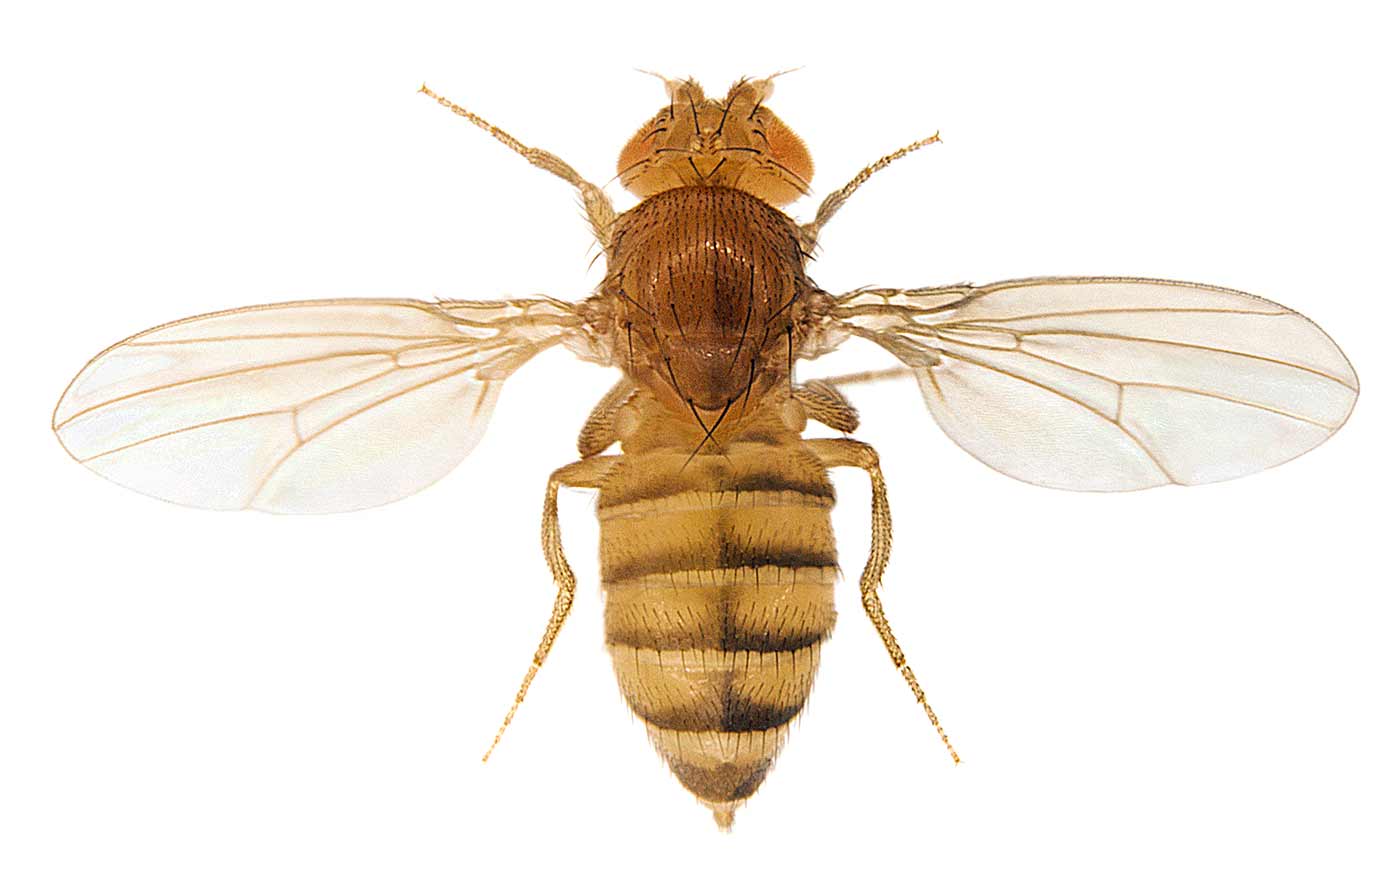 Asymmetrical fruit fly